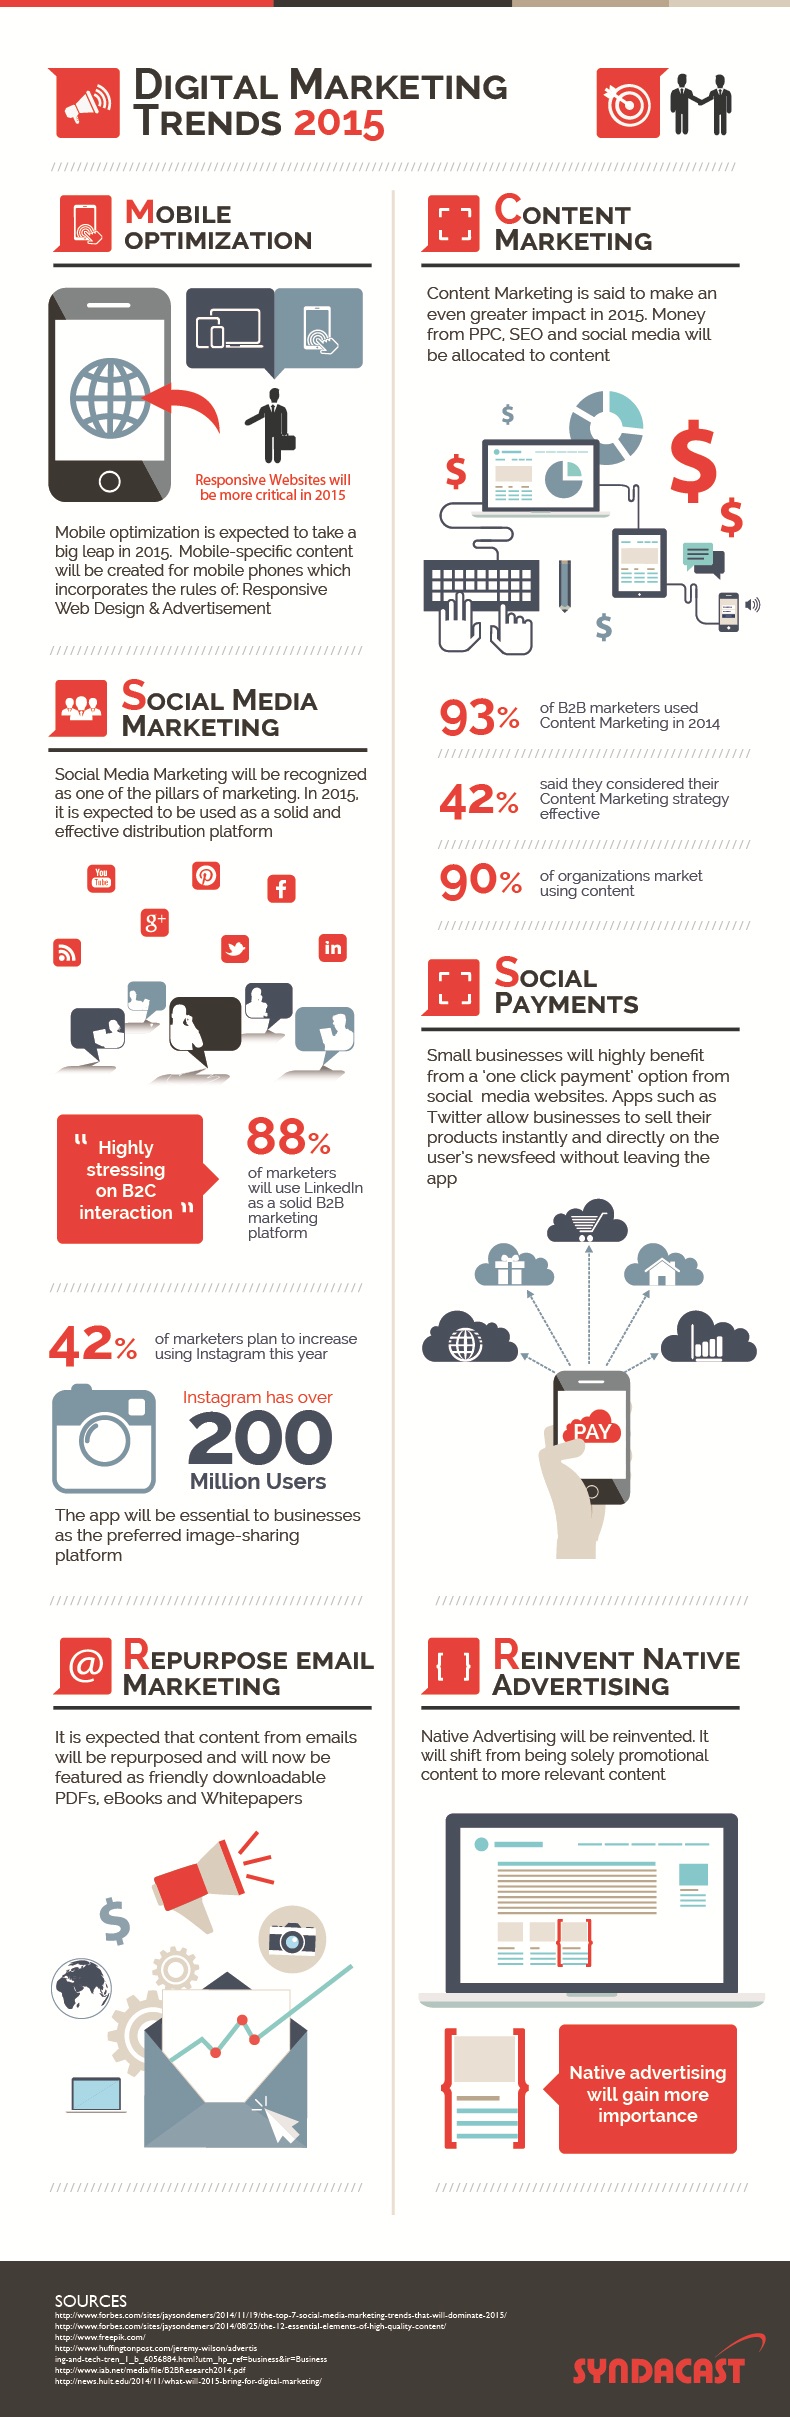 Digital-Marketing-Trends-2015-infographic